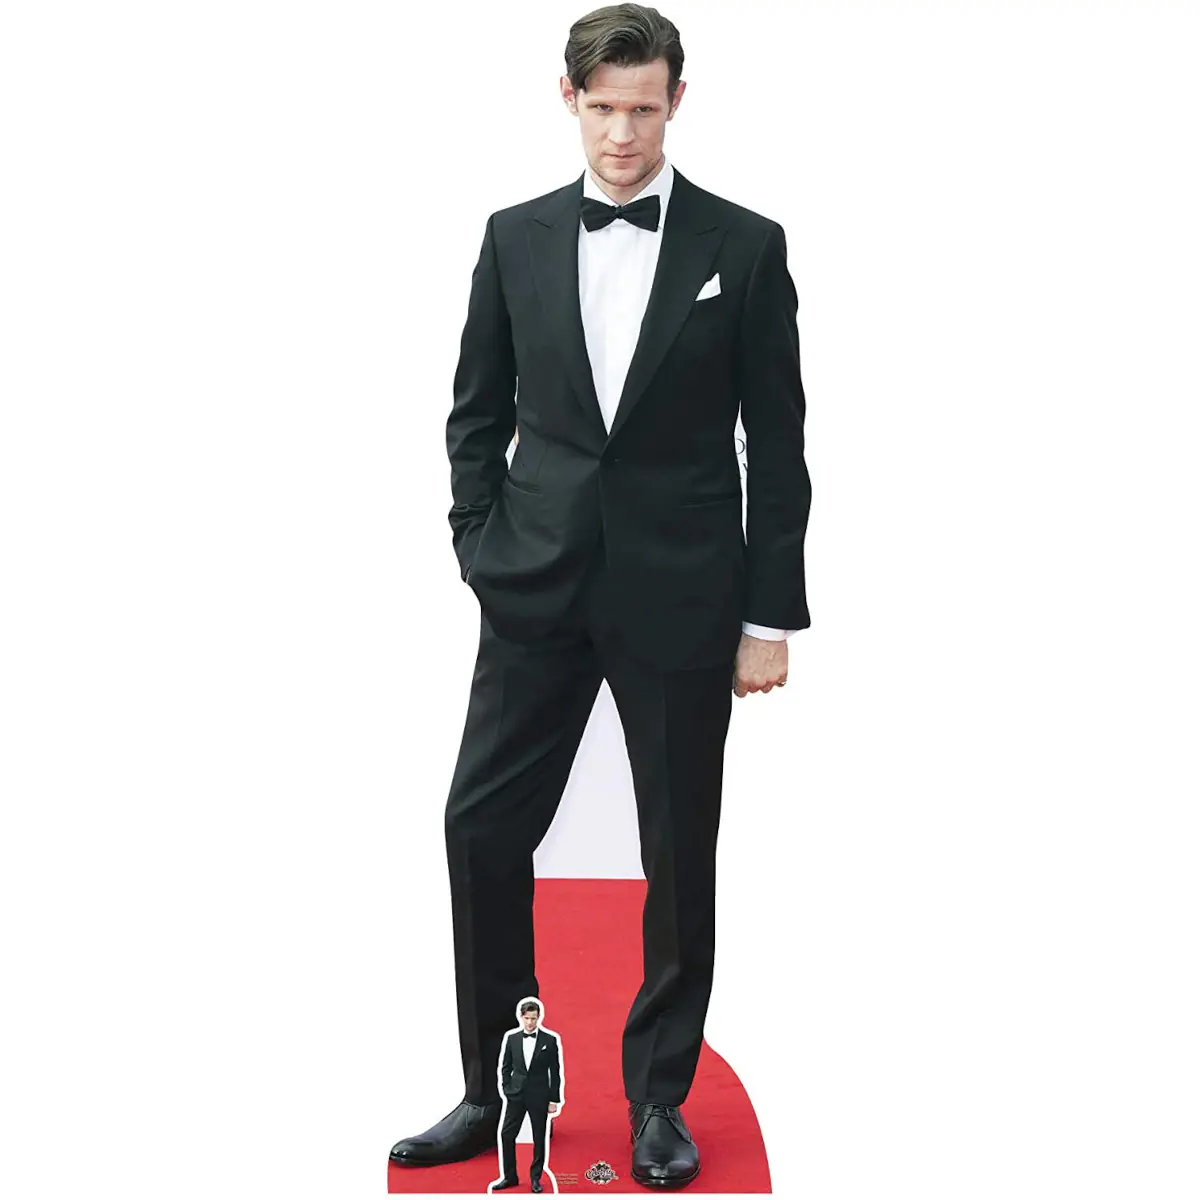 CS721 Matt Smith Red Carpet English Actor Lifesize Mini Cardboard Cutout Standee